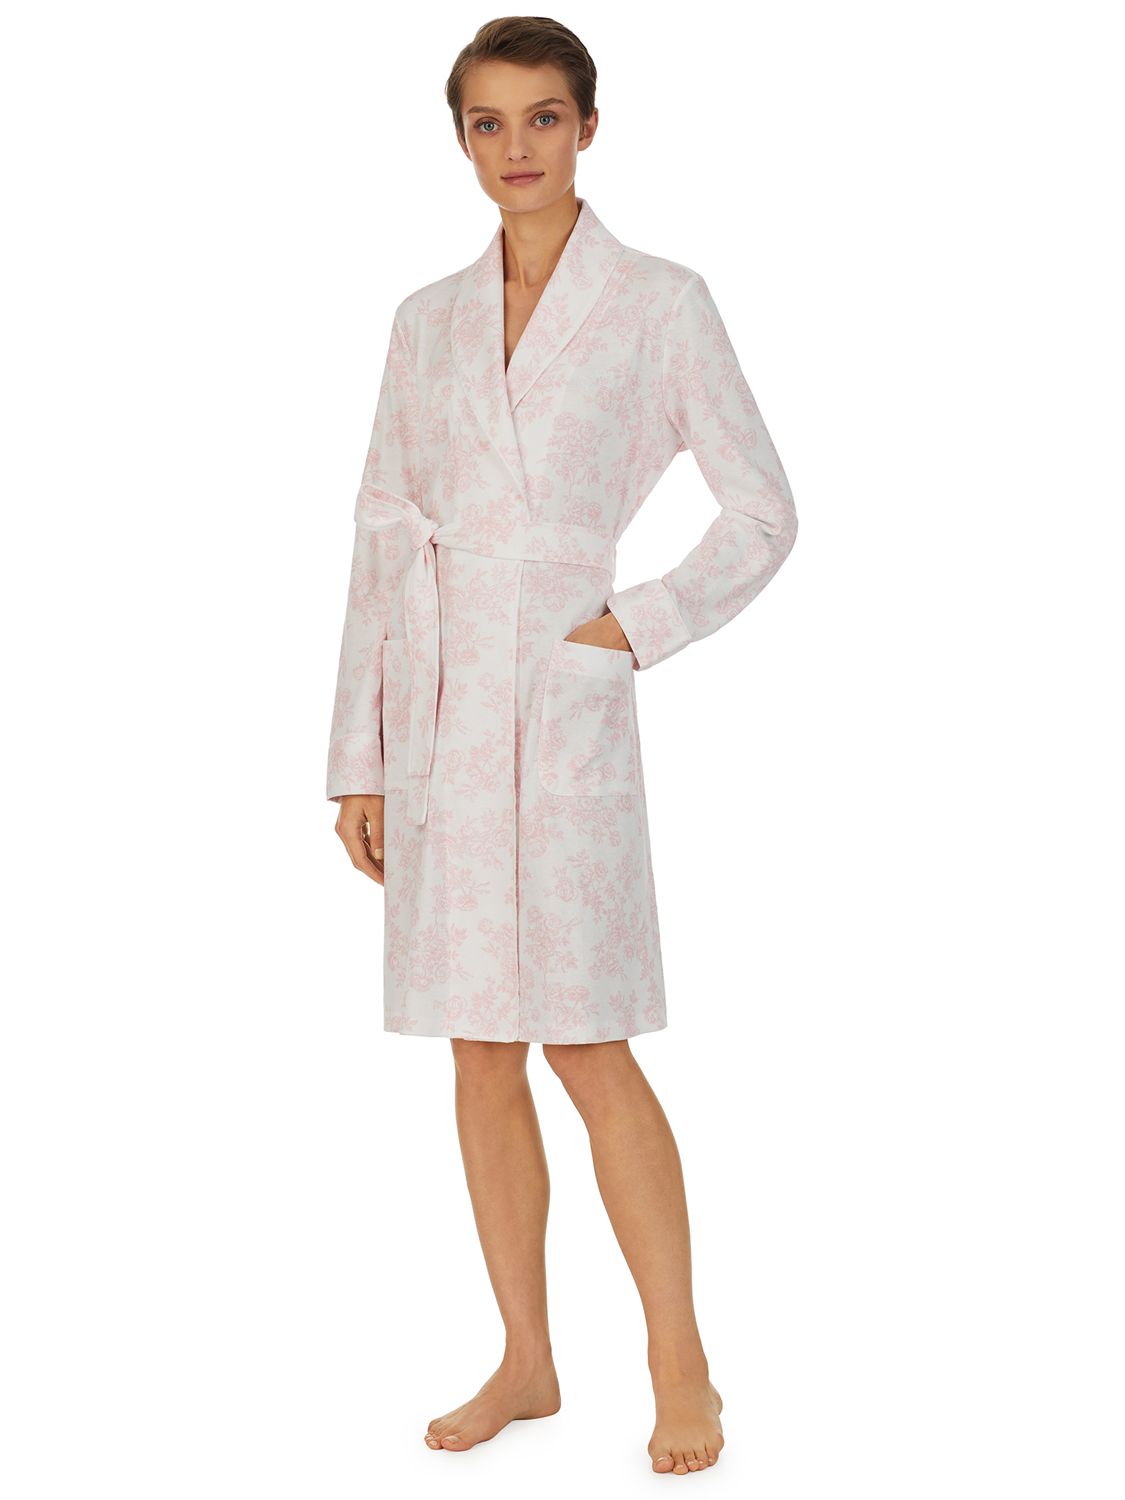 Lauren Ralph Lauren Interlock Shawl Collar Rose Print Robe, Pale Pink/White